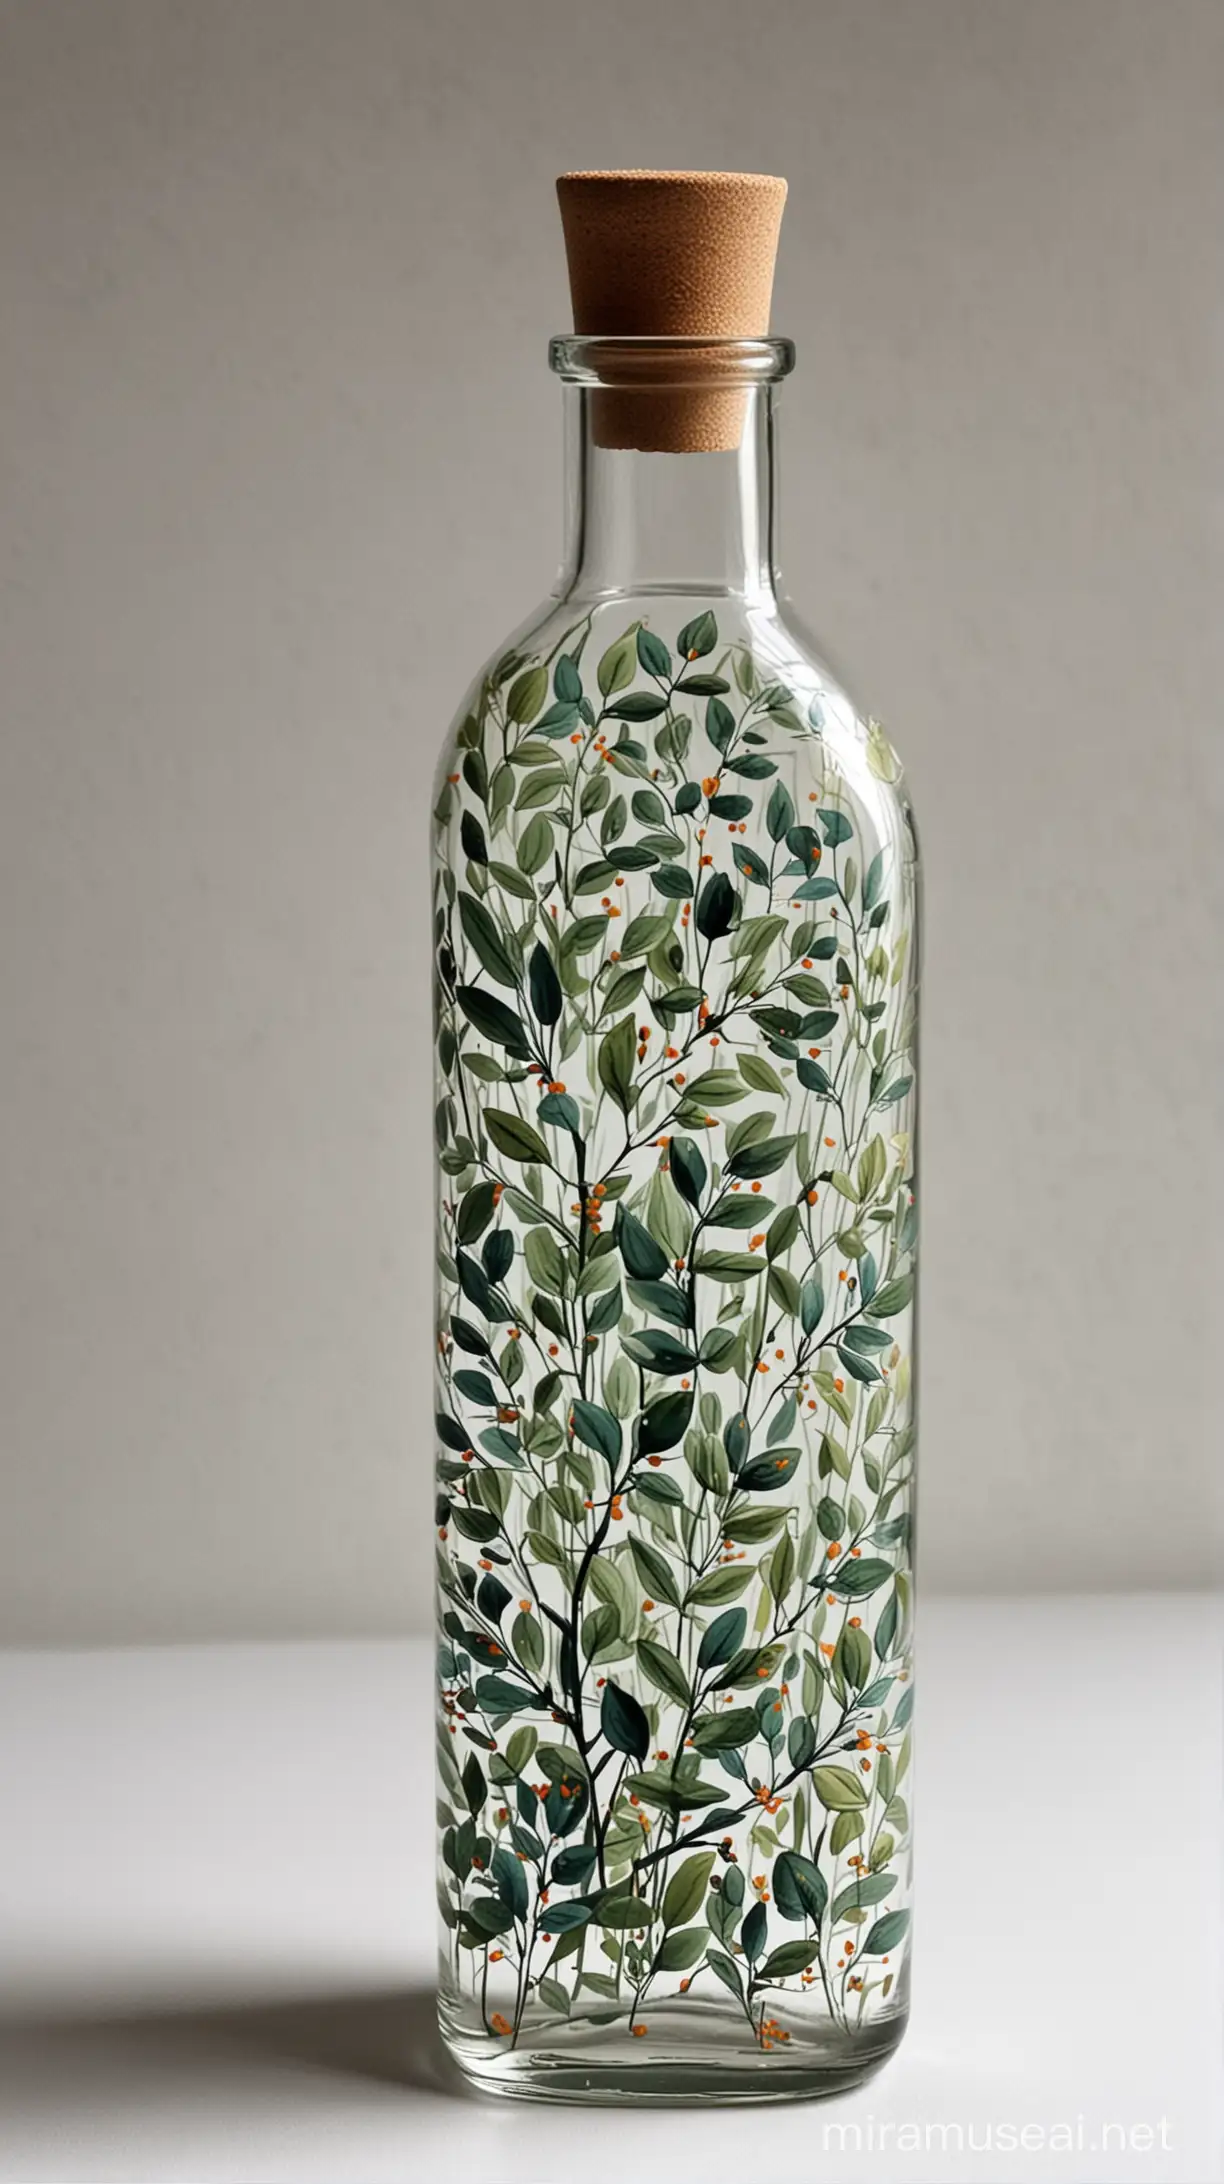 HandPainted Bottle Art with Delicate Leaf Design